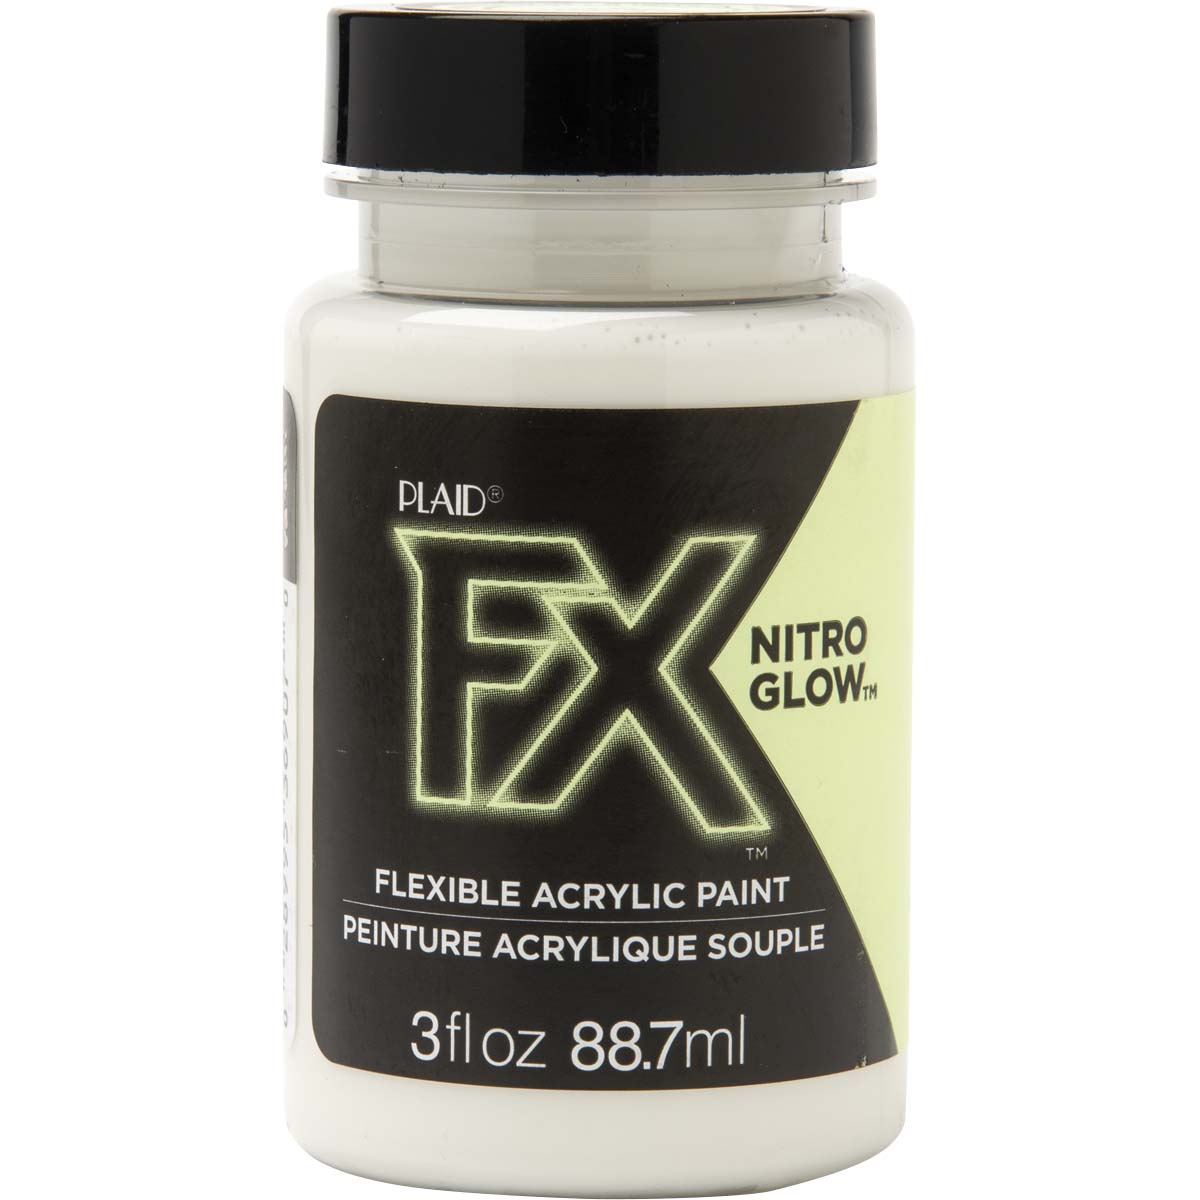 PlaidFX Nitro Glow Flexible Acrylic Paint - Neutral, 3 oz. - 36907